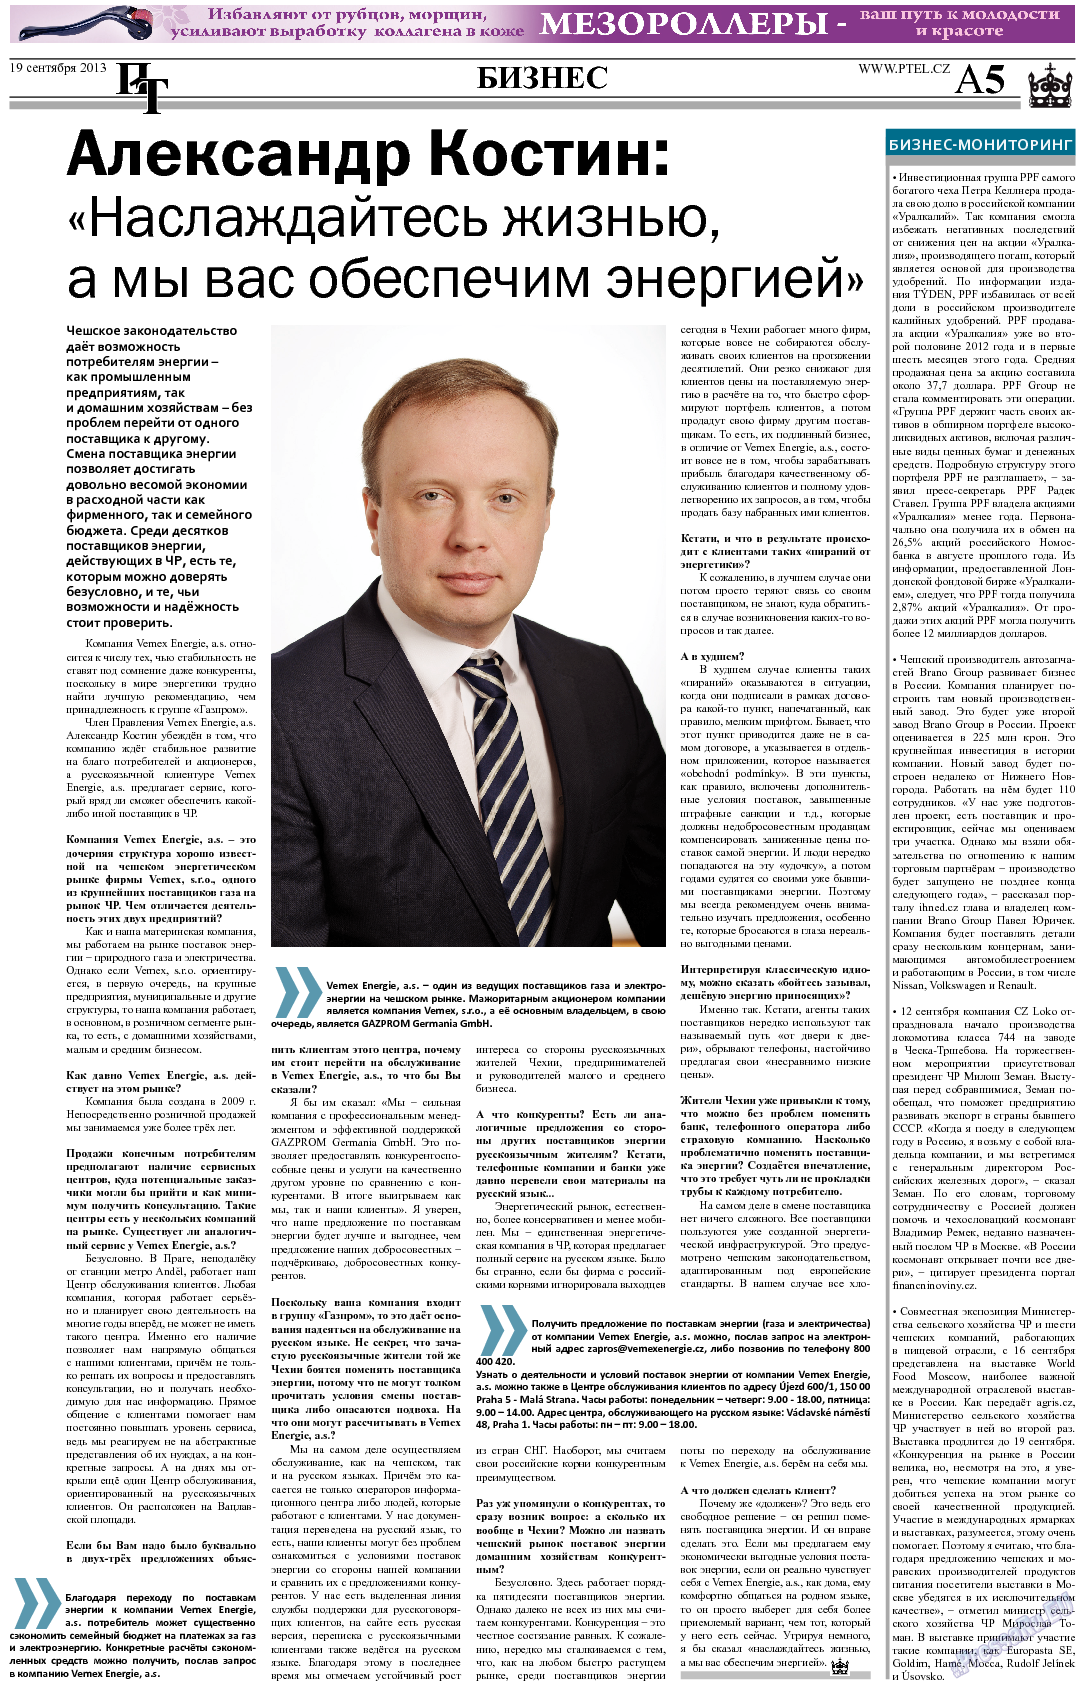 Пражский телеграф, газета. 2013 №37 стр.5